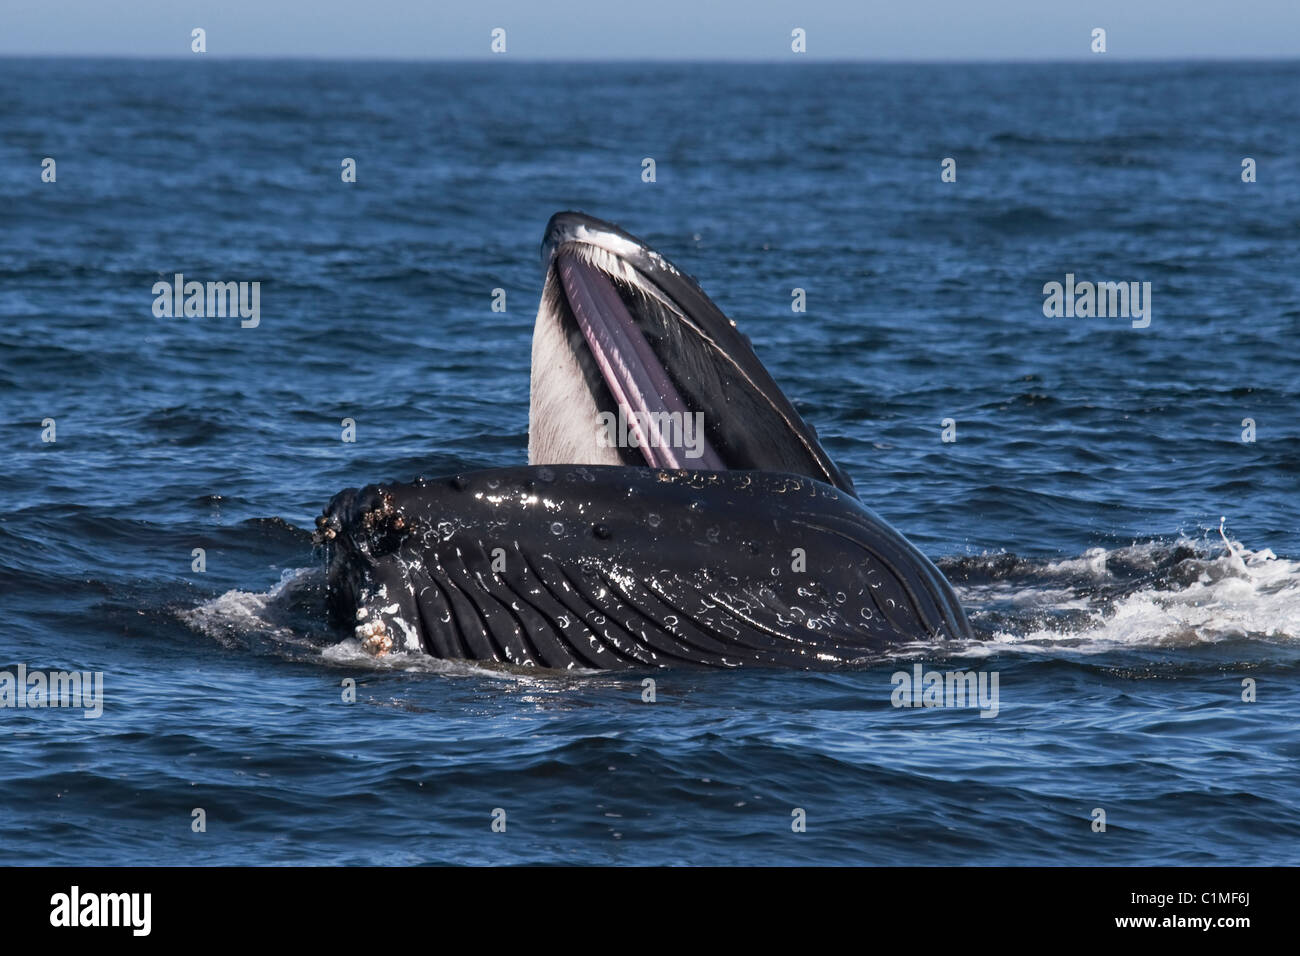 Humpback Whale (Megaptera novaeangliae) lunge-feeding on Krill. Monterey, California, Pacific Ocean. Stock Photo